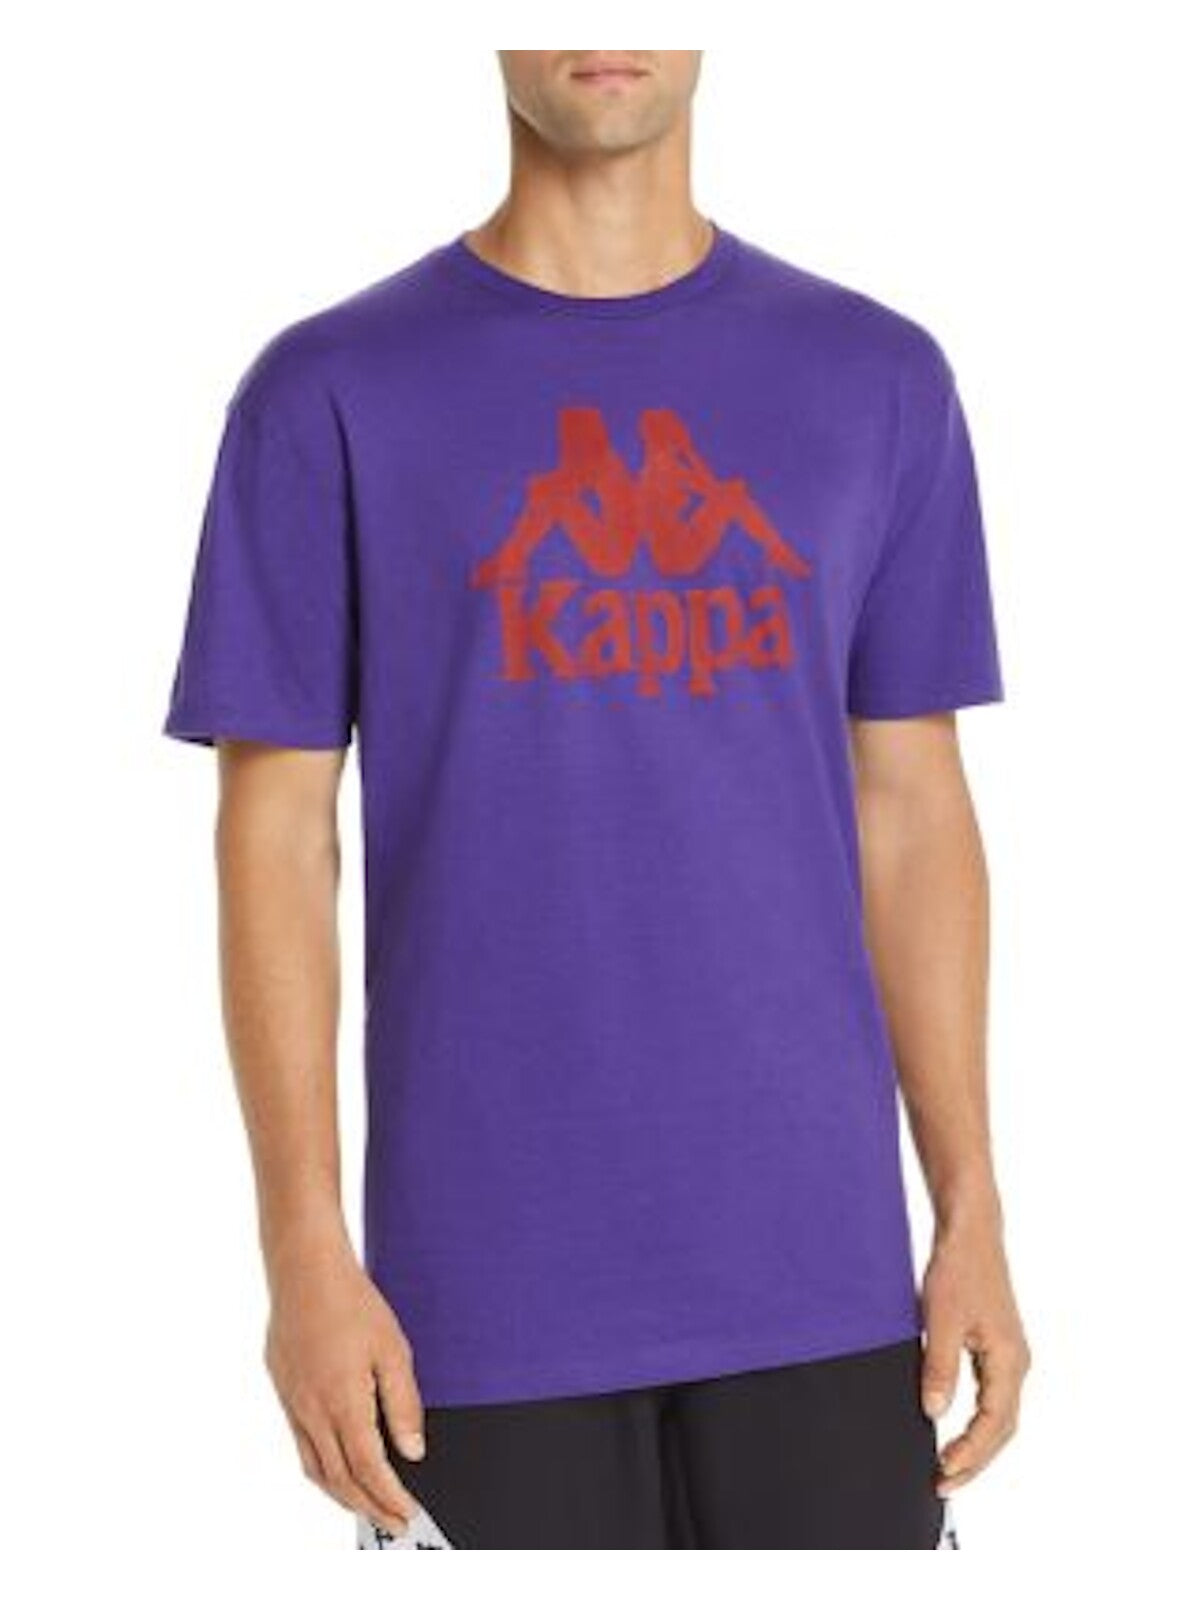 KARA Mens Purple Logo Graphic Classic Fit T-Shirt S